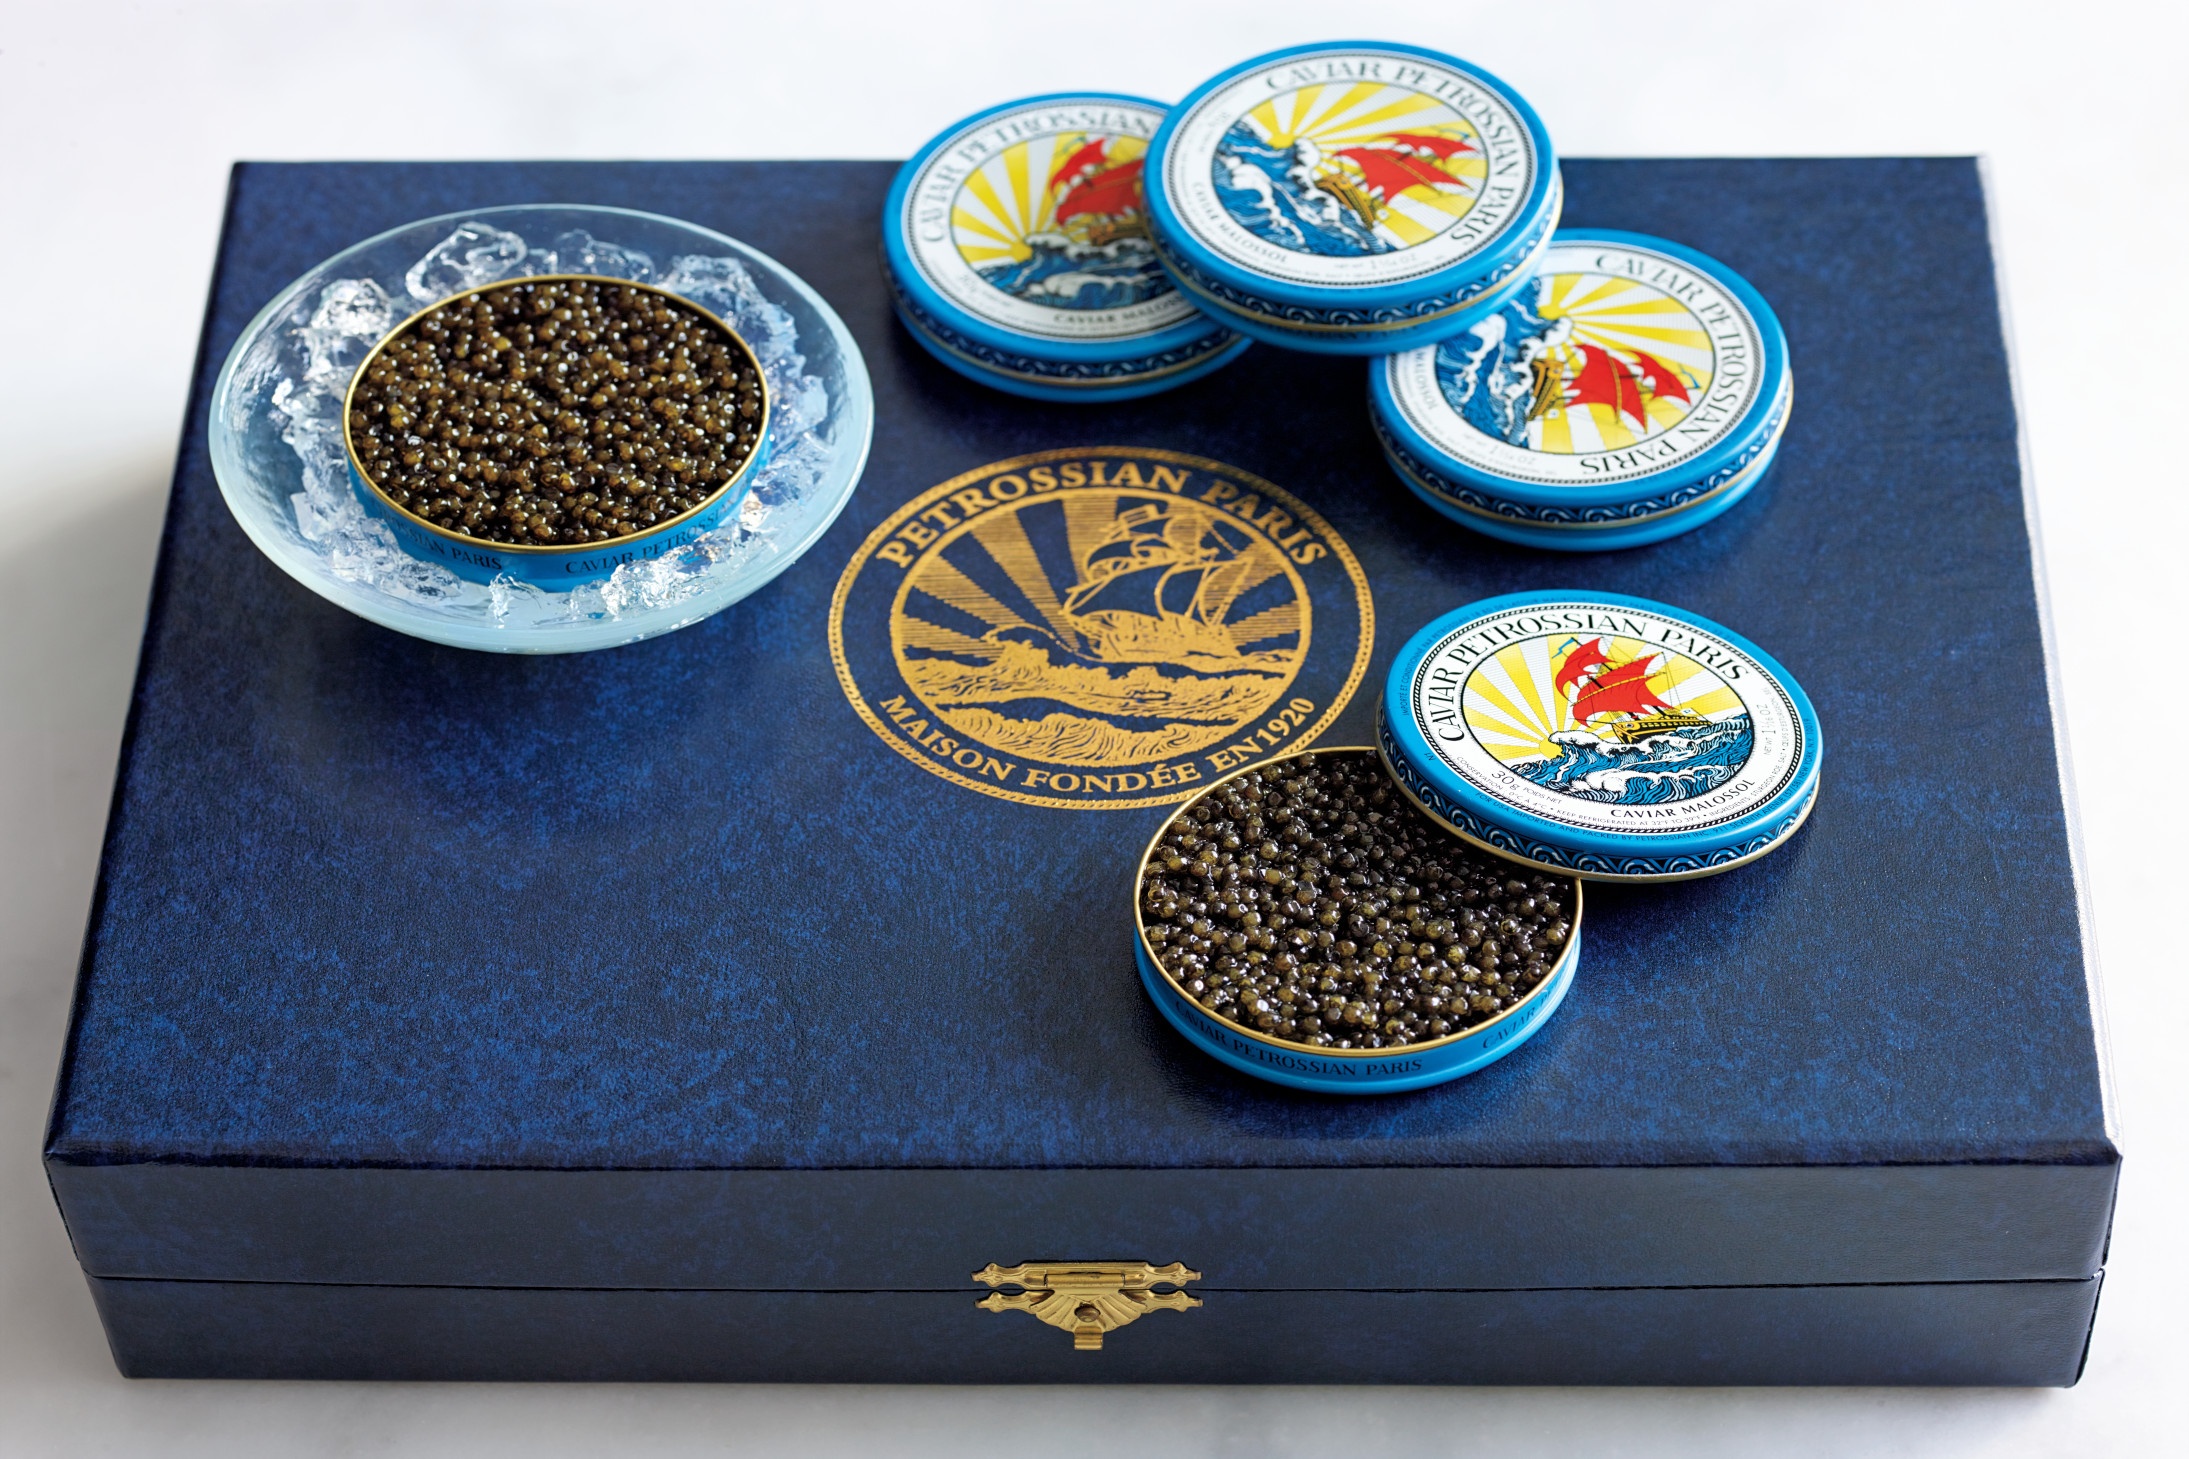 Petrossian : the King of caviars worldwide !